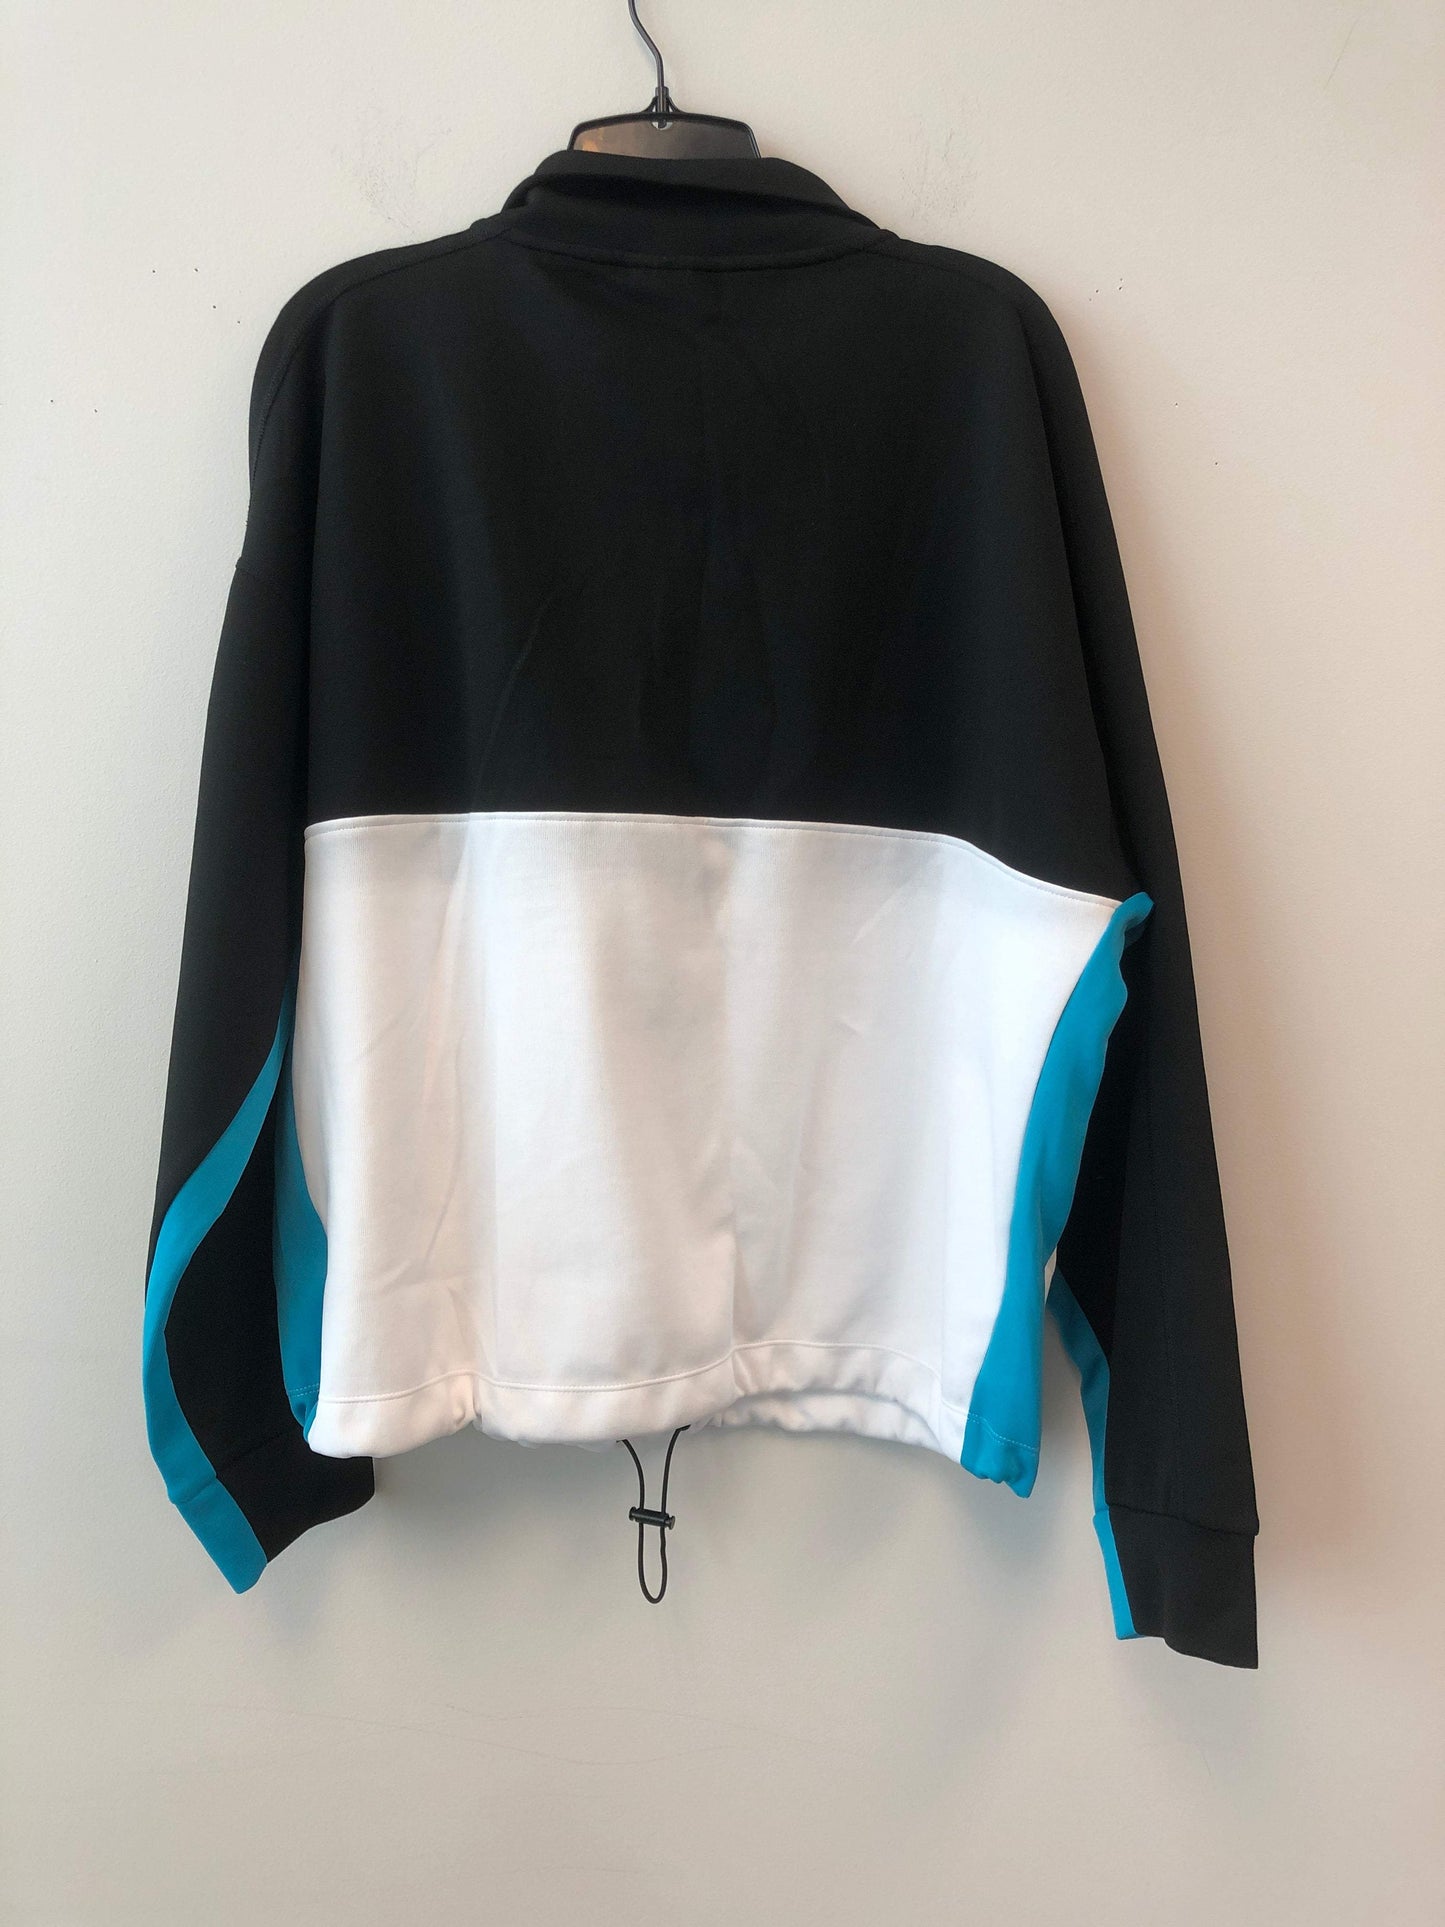 DKNY Sport XL/ XXL Black/White Polyester Blend Pullover Sweatshirt NWT